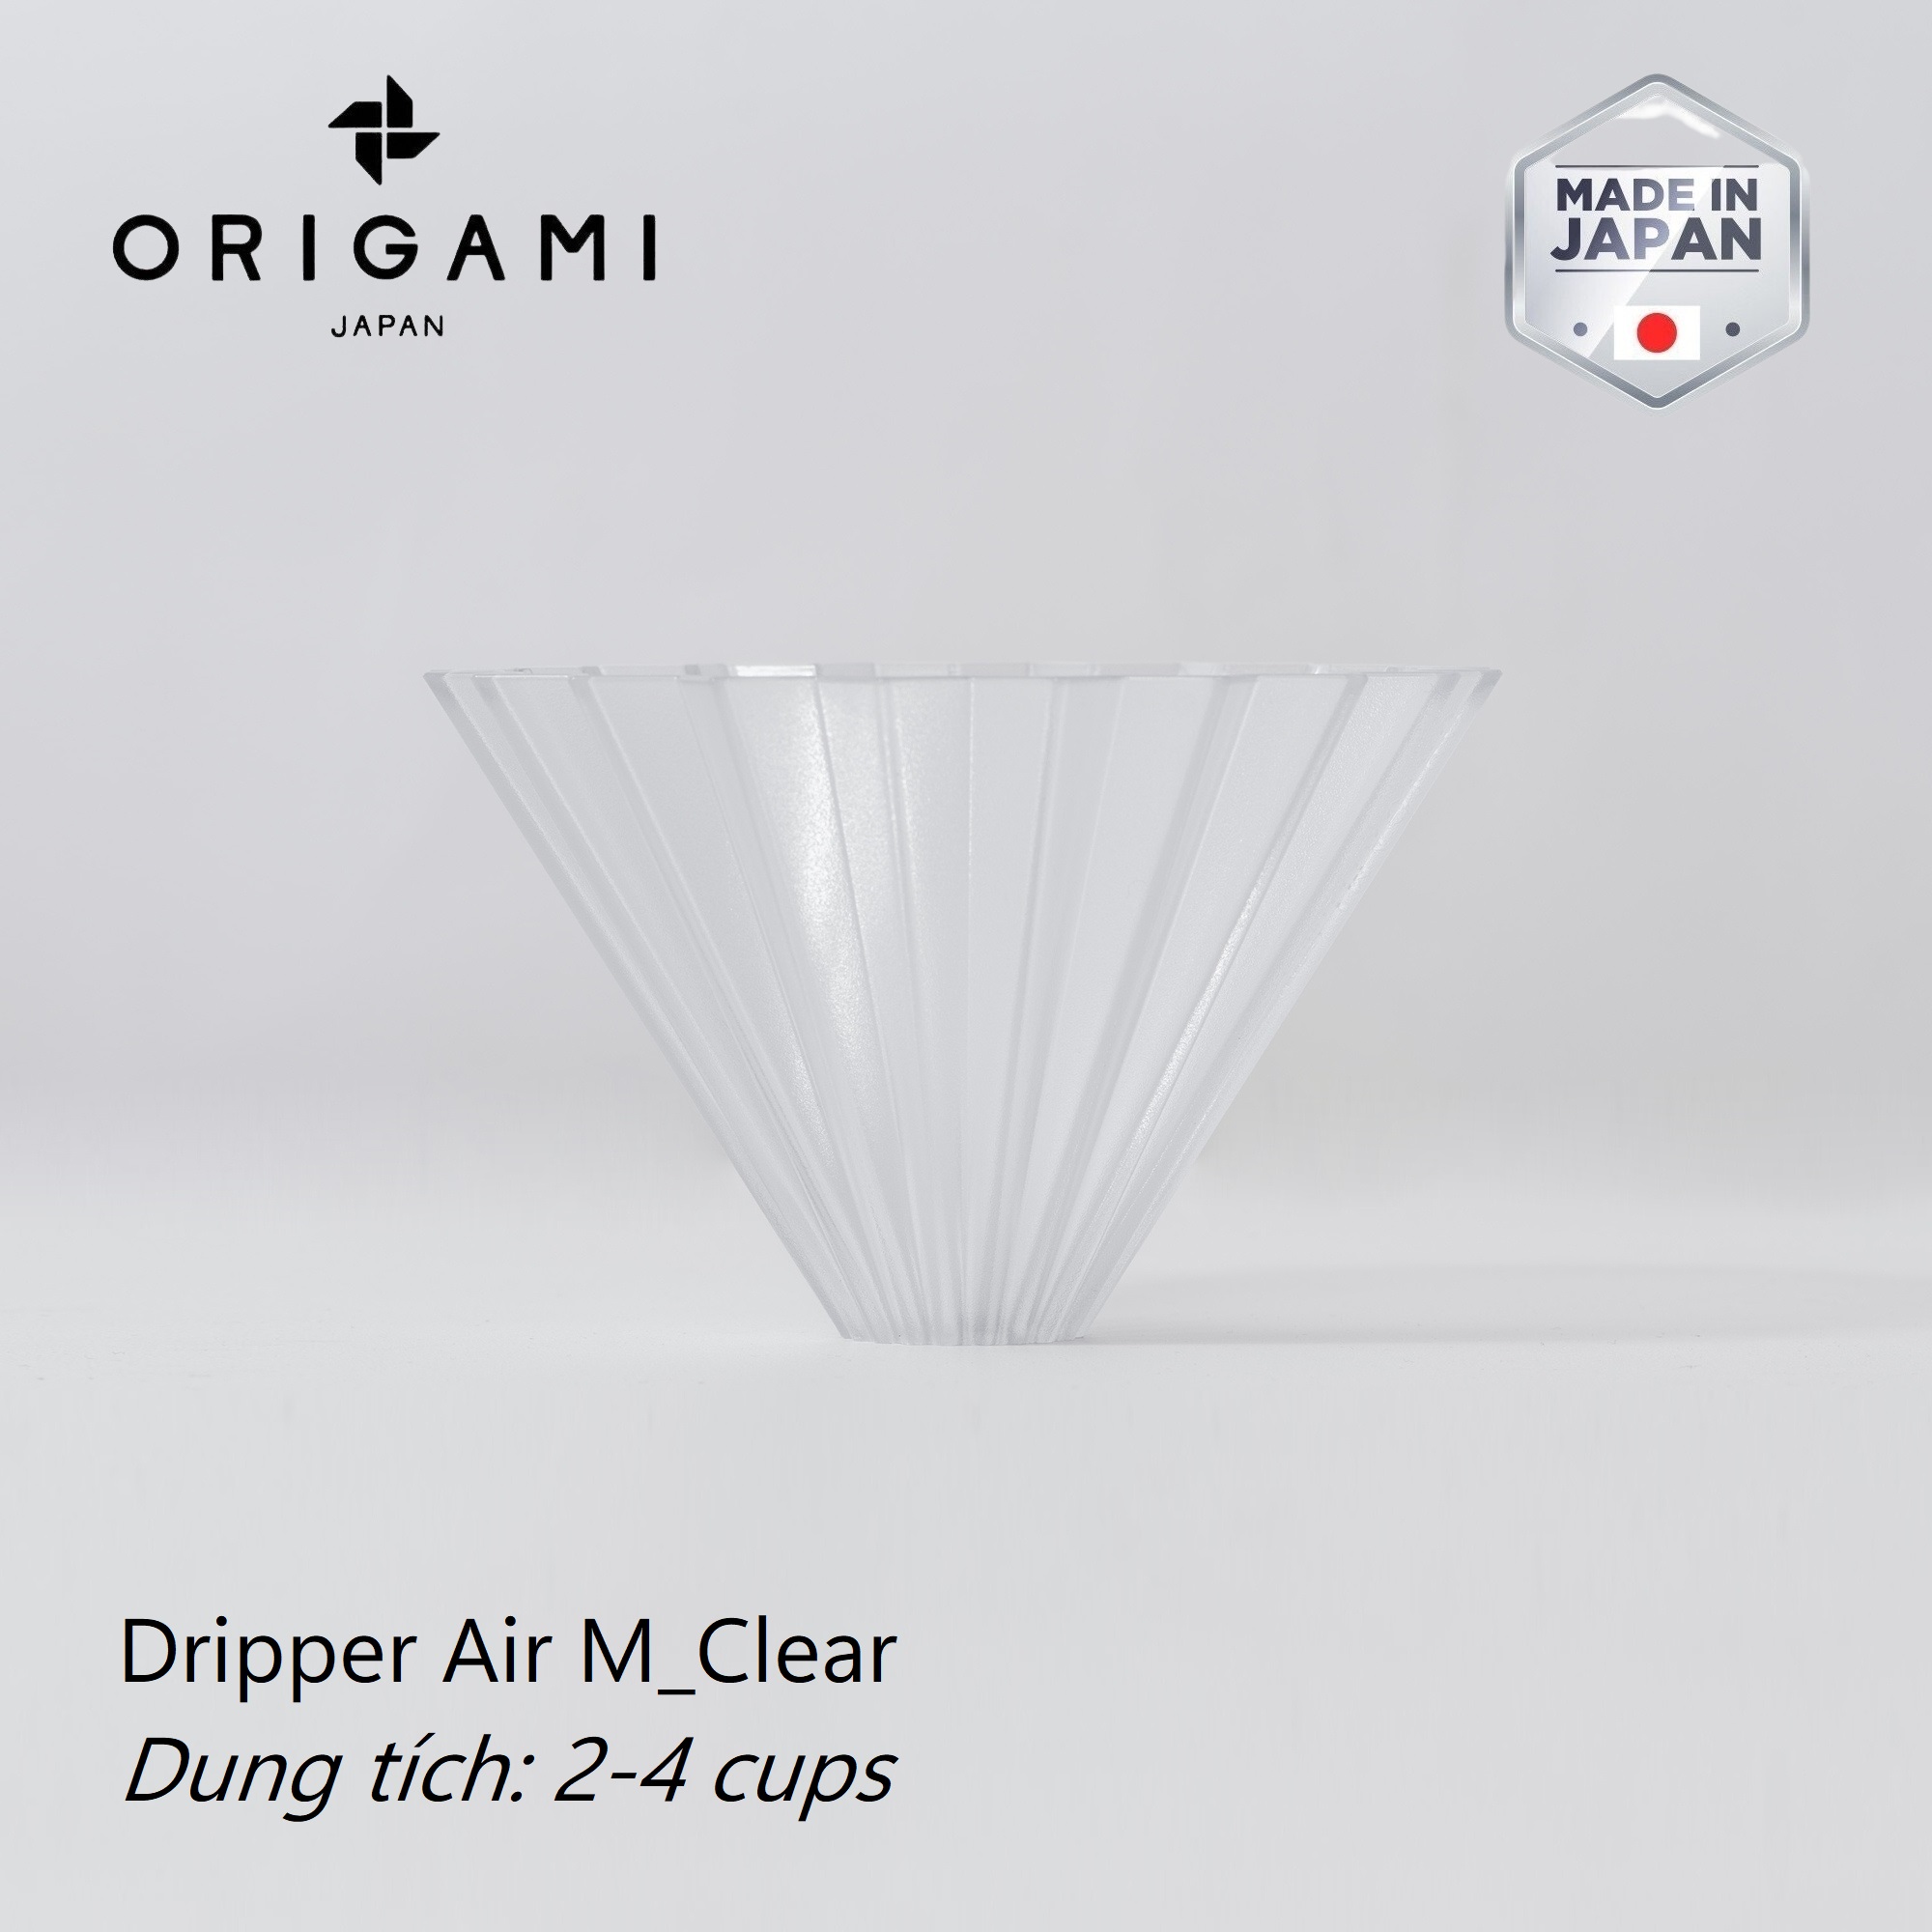 Phễu nhựa V60 02 Origami Dripper Air M Pour over